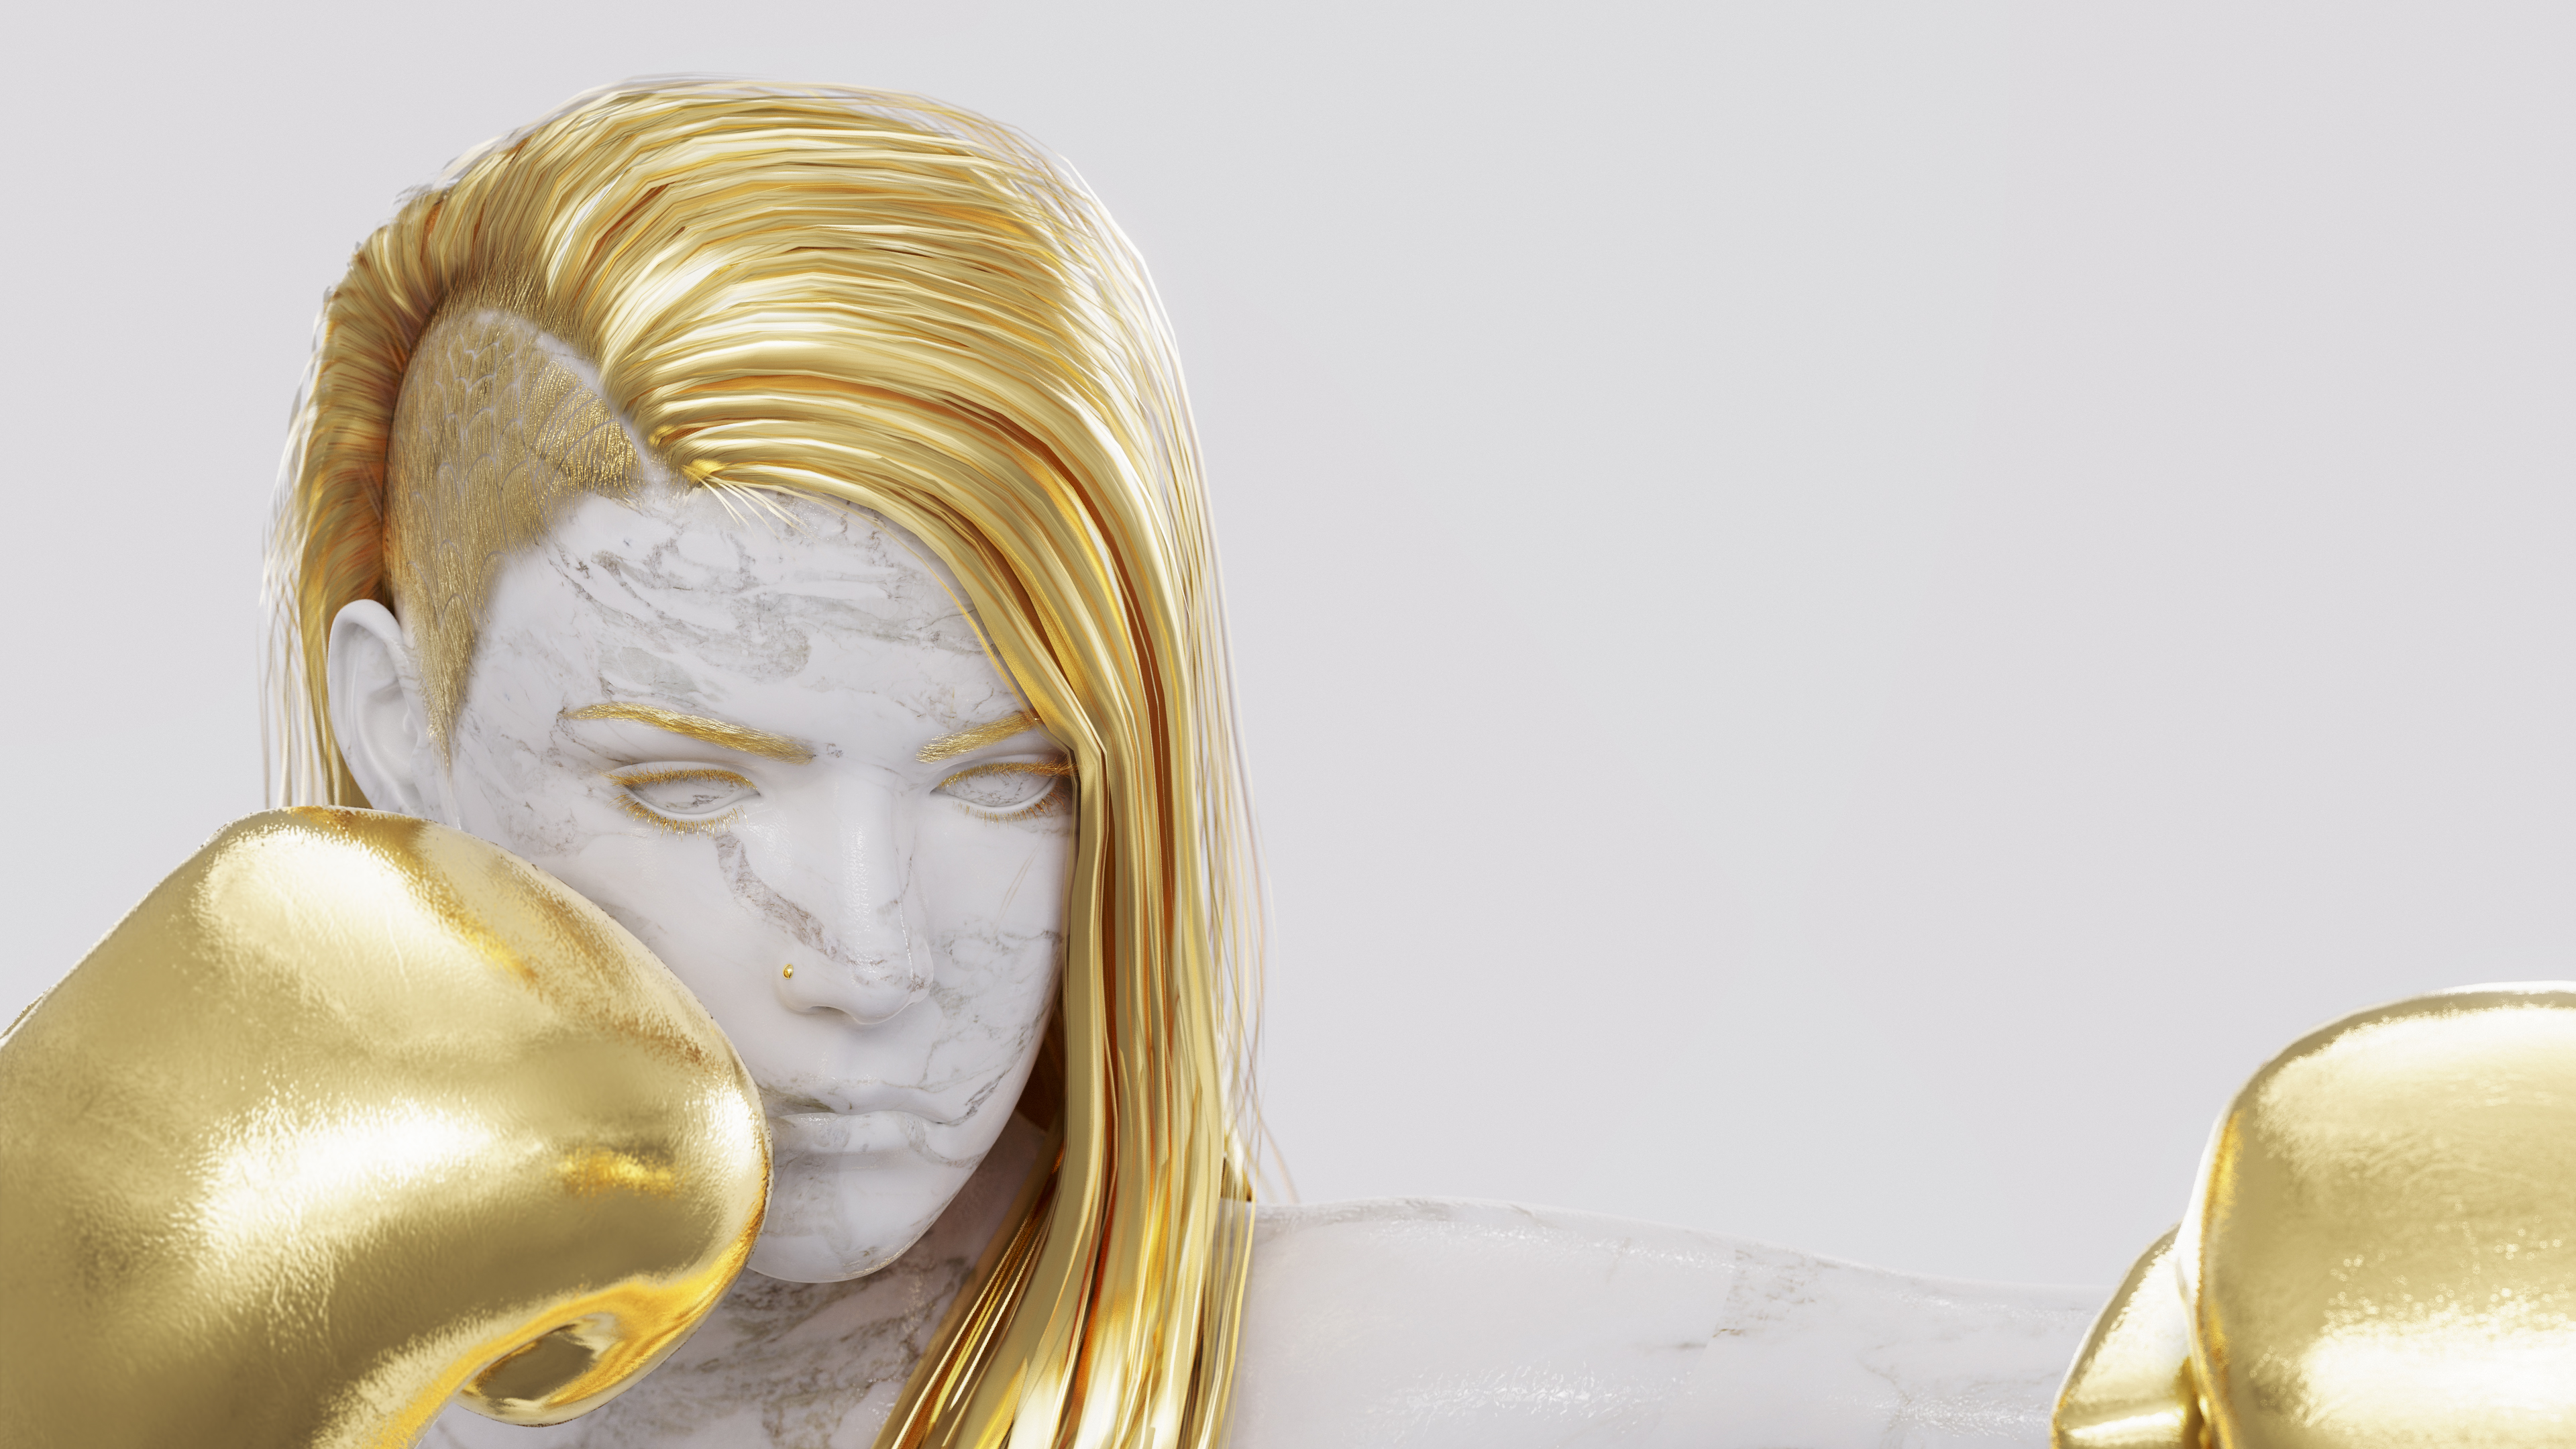 Marble Gold Boxing Left Hook Golden Hair Guard CGi Digital Art 3D Graphics Minimalism White Backgrou 3840x2160